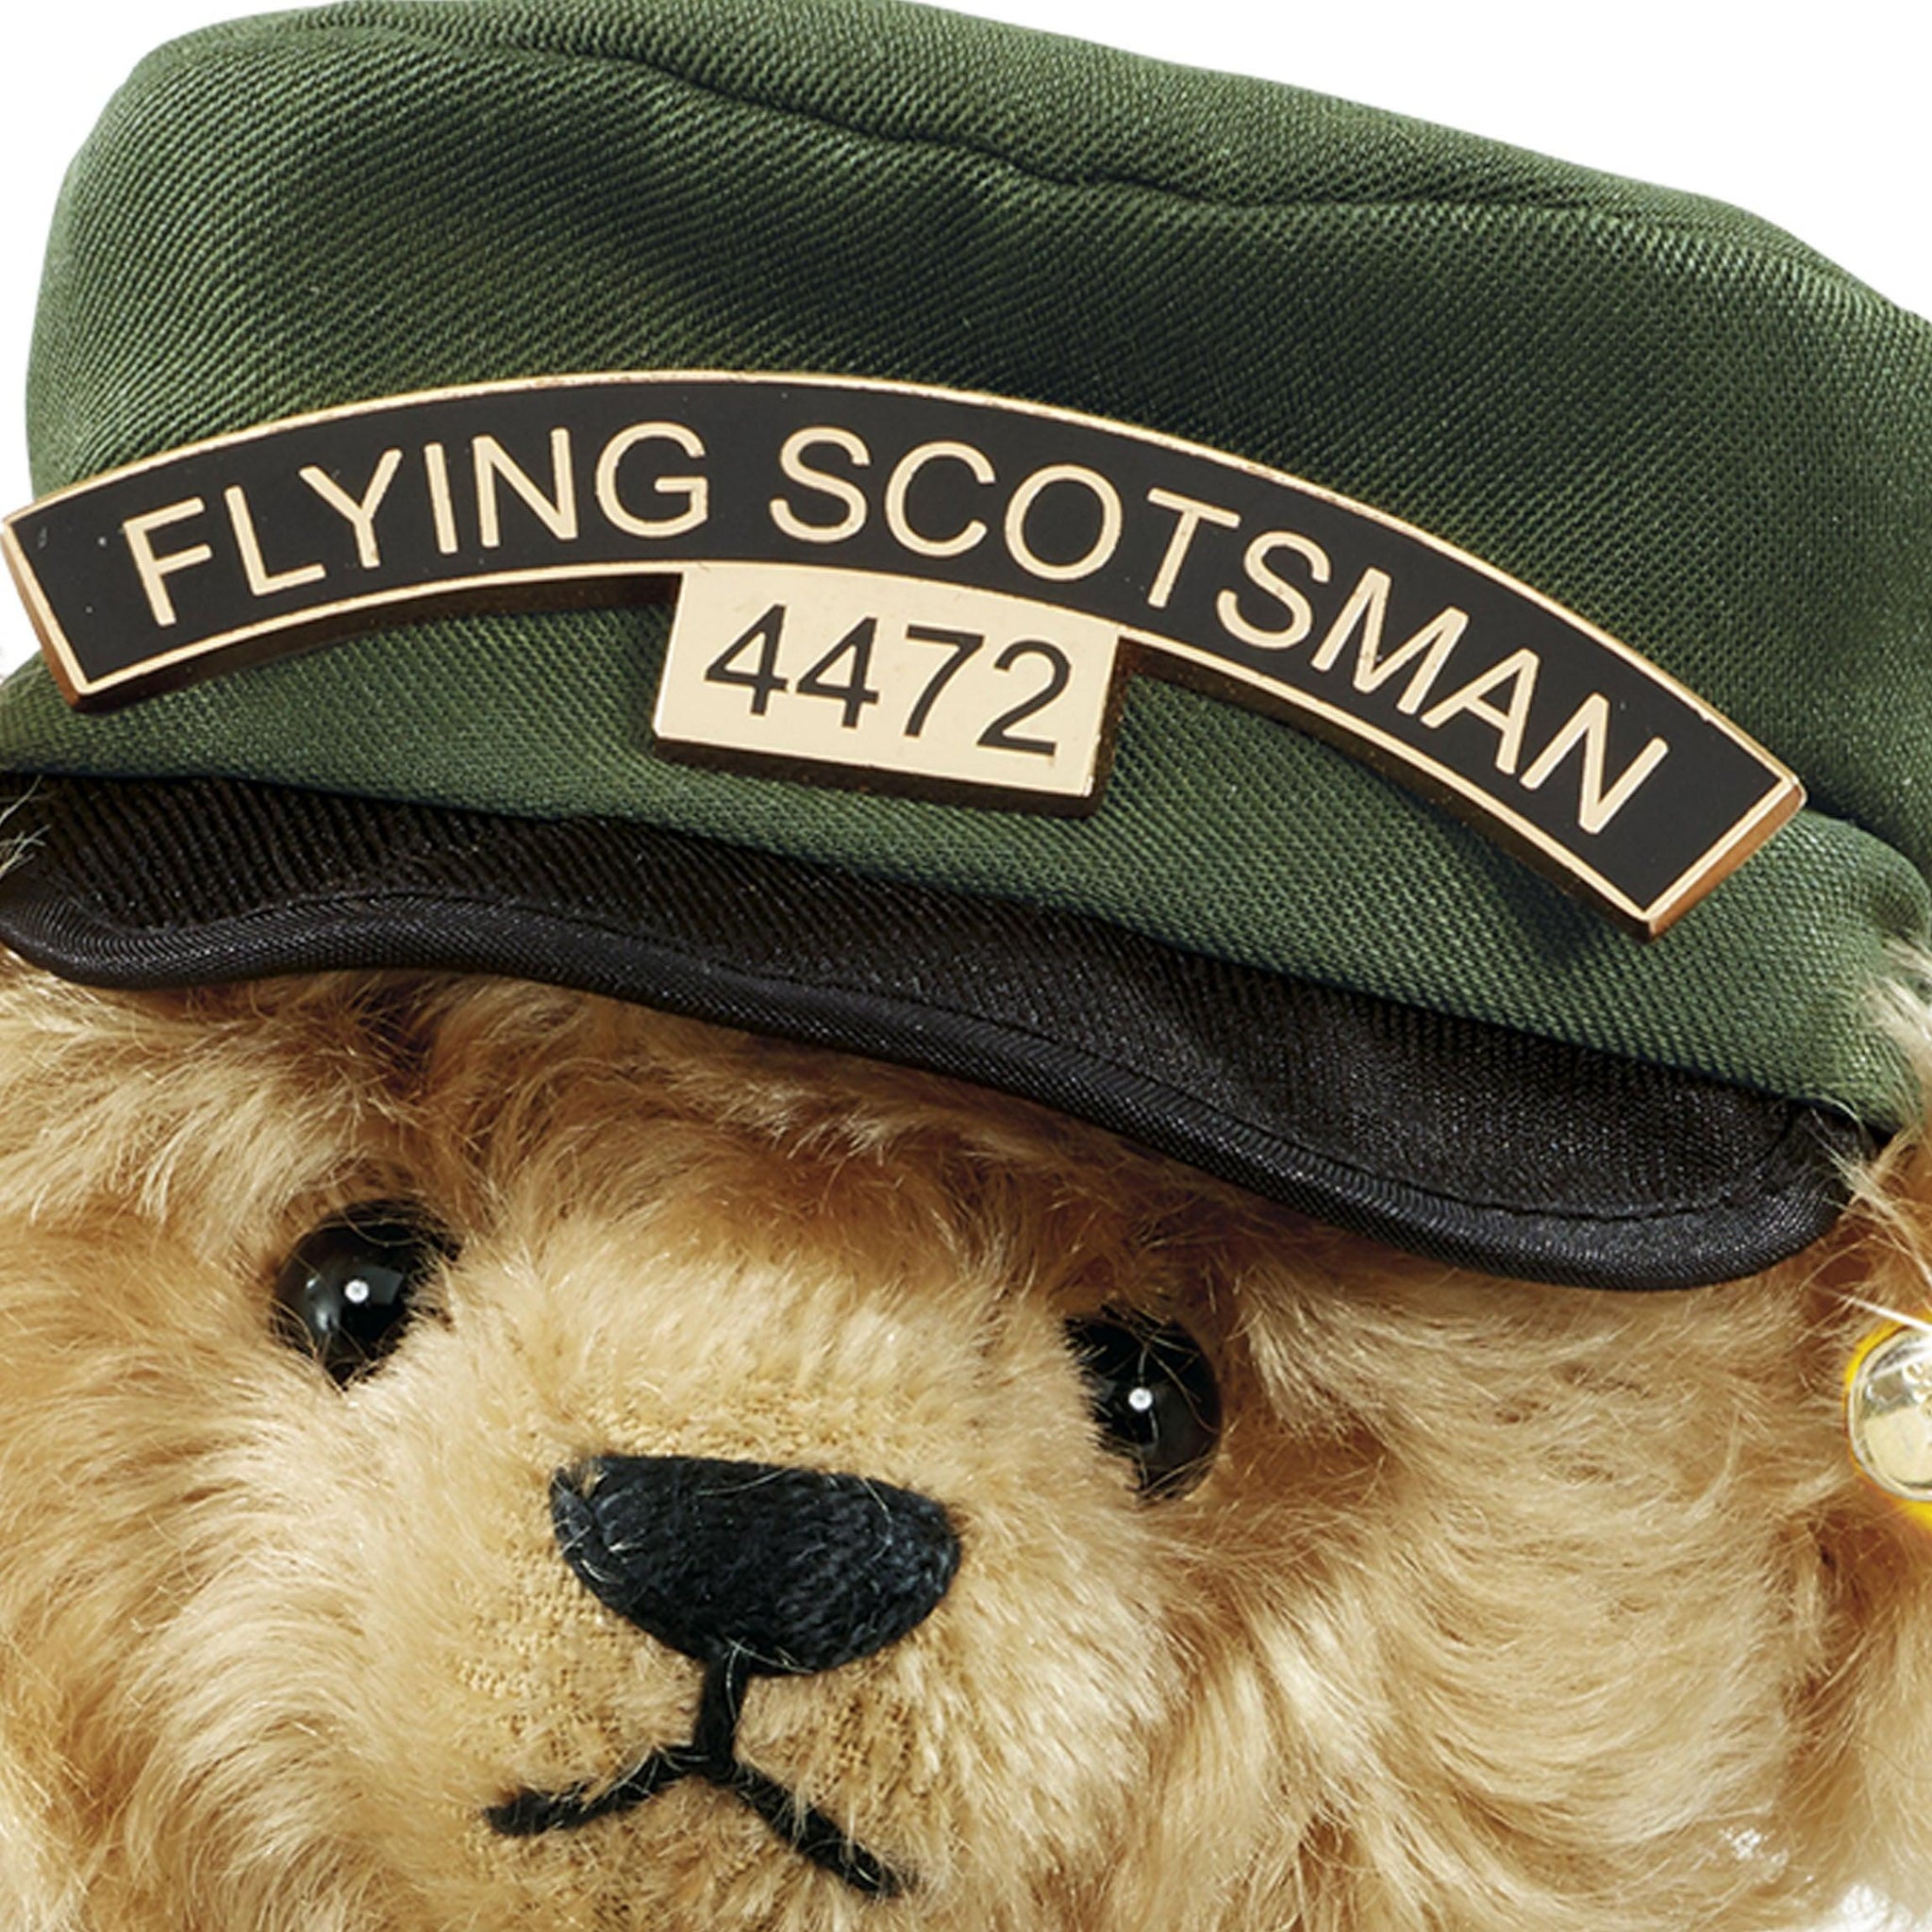 Bill The Flying Scotsman Bear by Steiff - Science Museum Shop